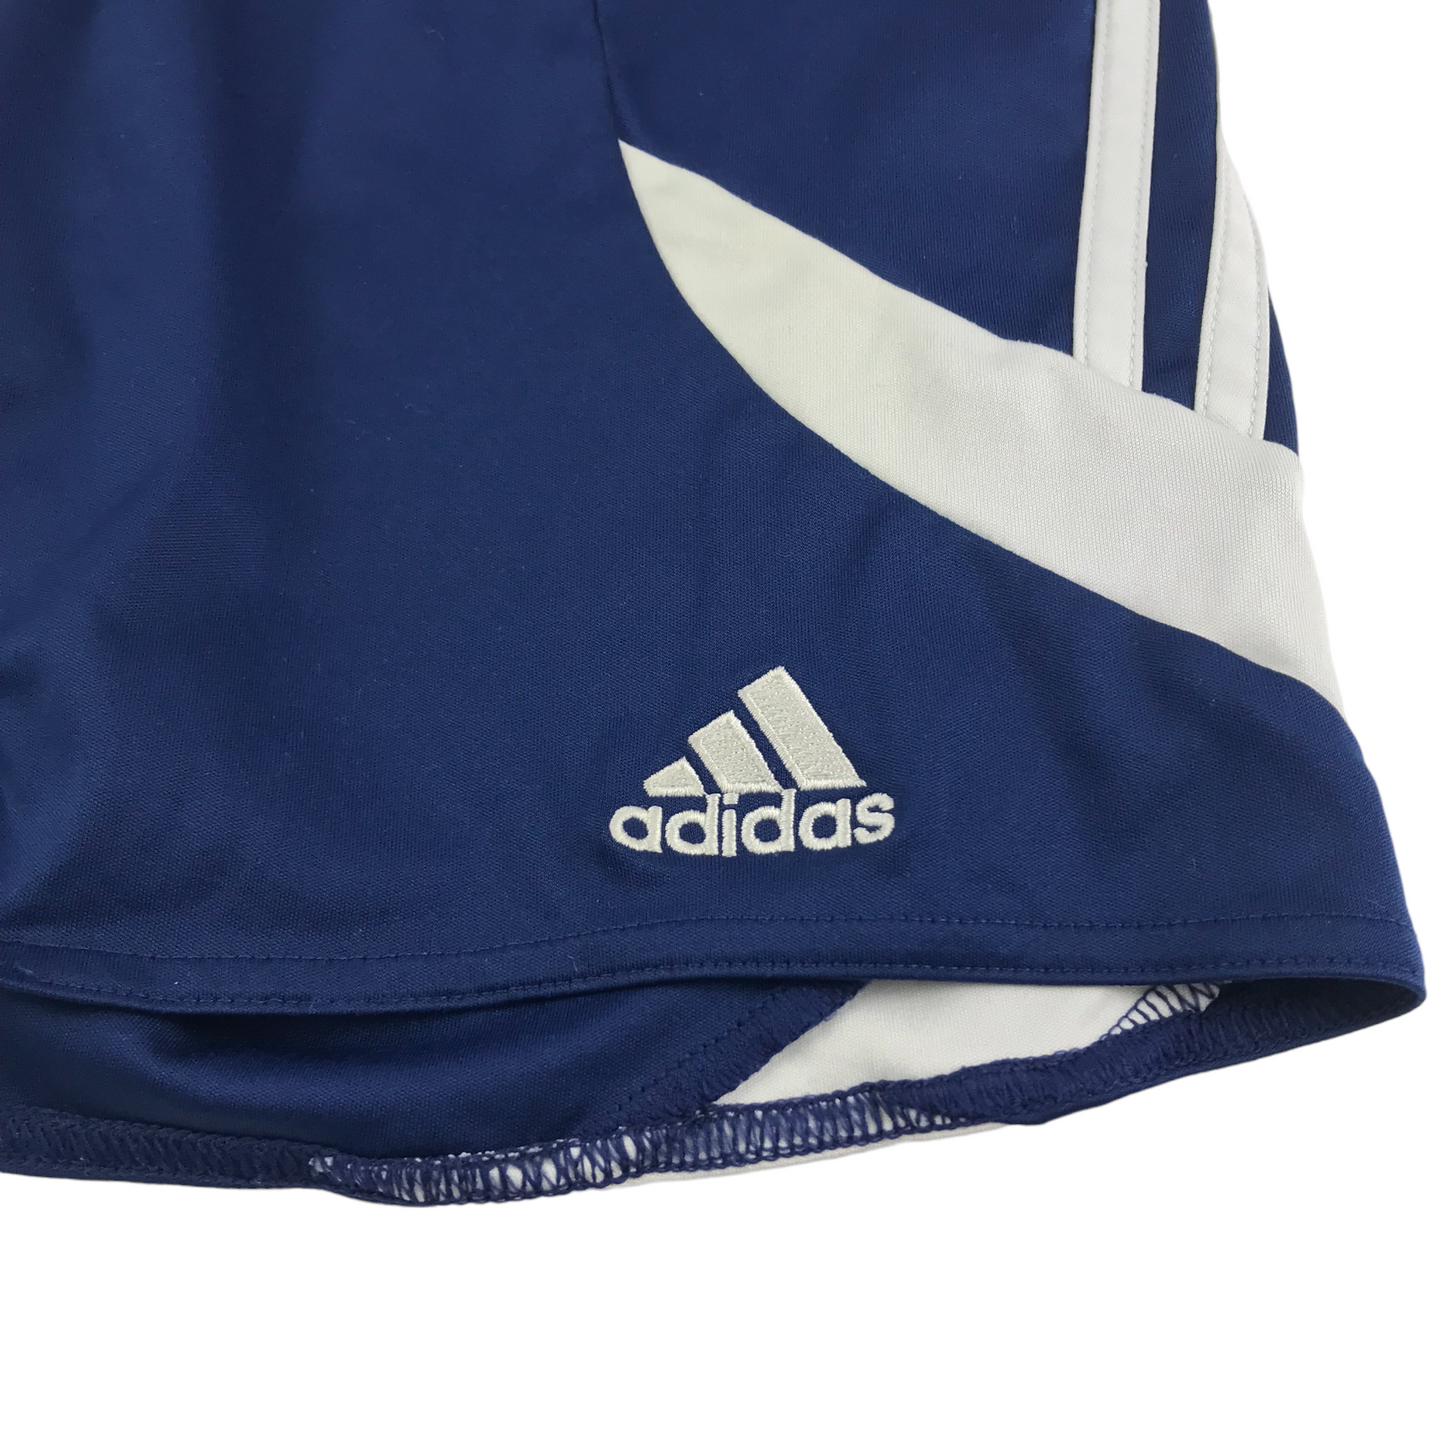 Adidas Sport Shorts Age 9 Navy Three Stripes